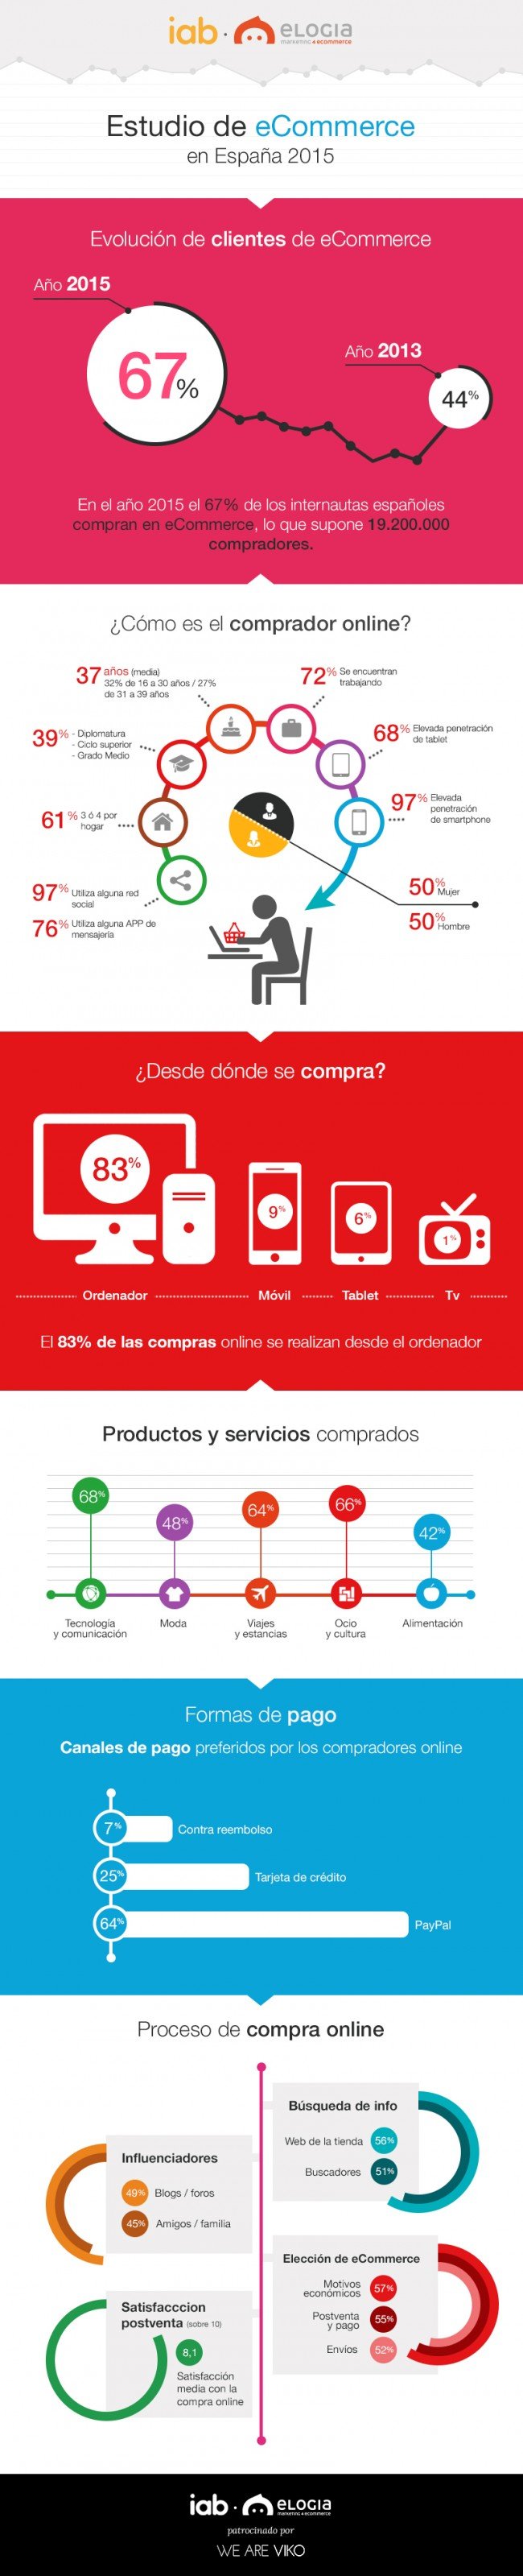 infografia-iab-2015-ecommerce